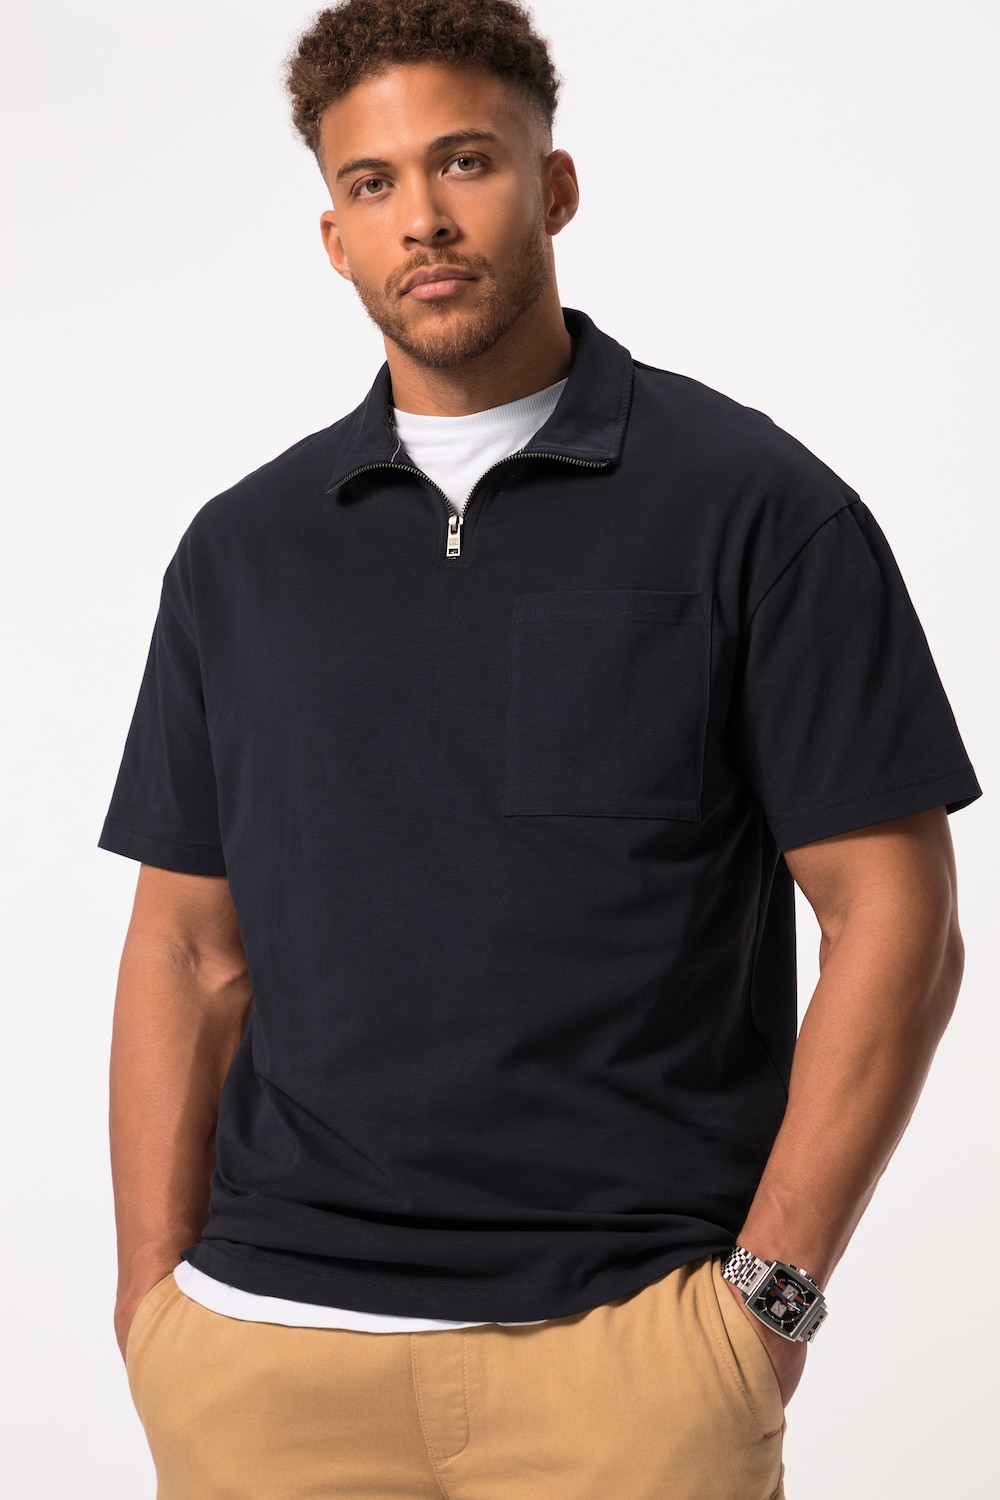 STHUGE Poloshirt, Halbarm, Zipper, bis 8 XL